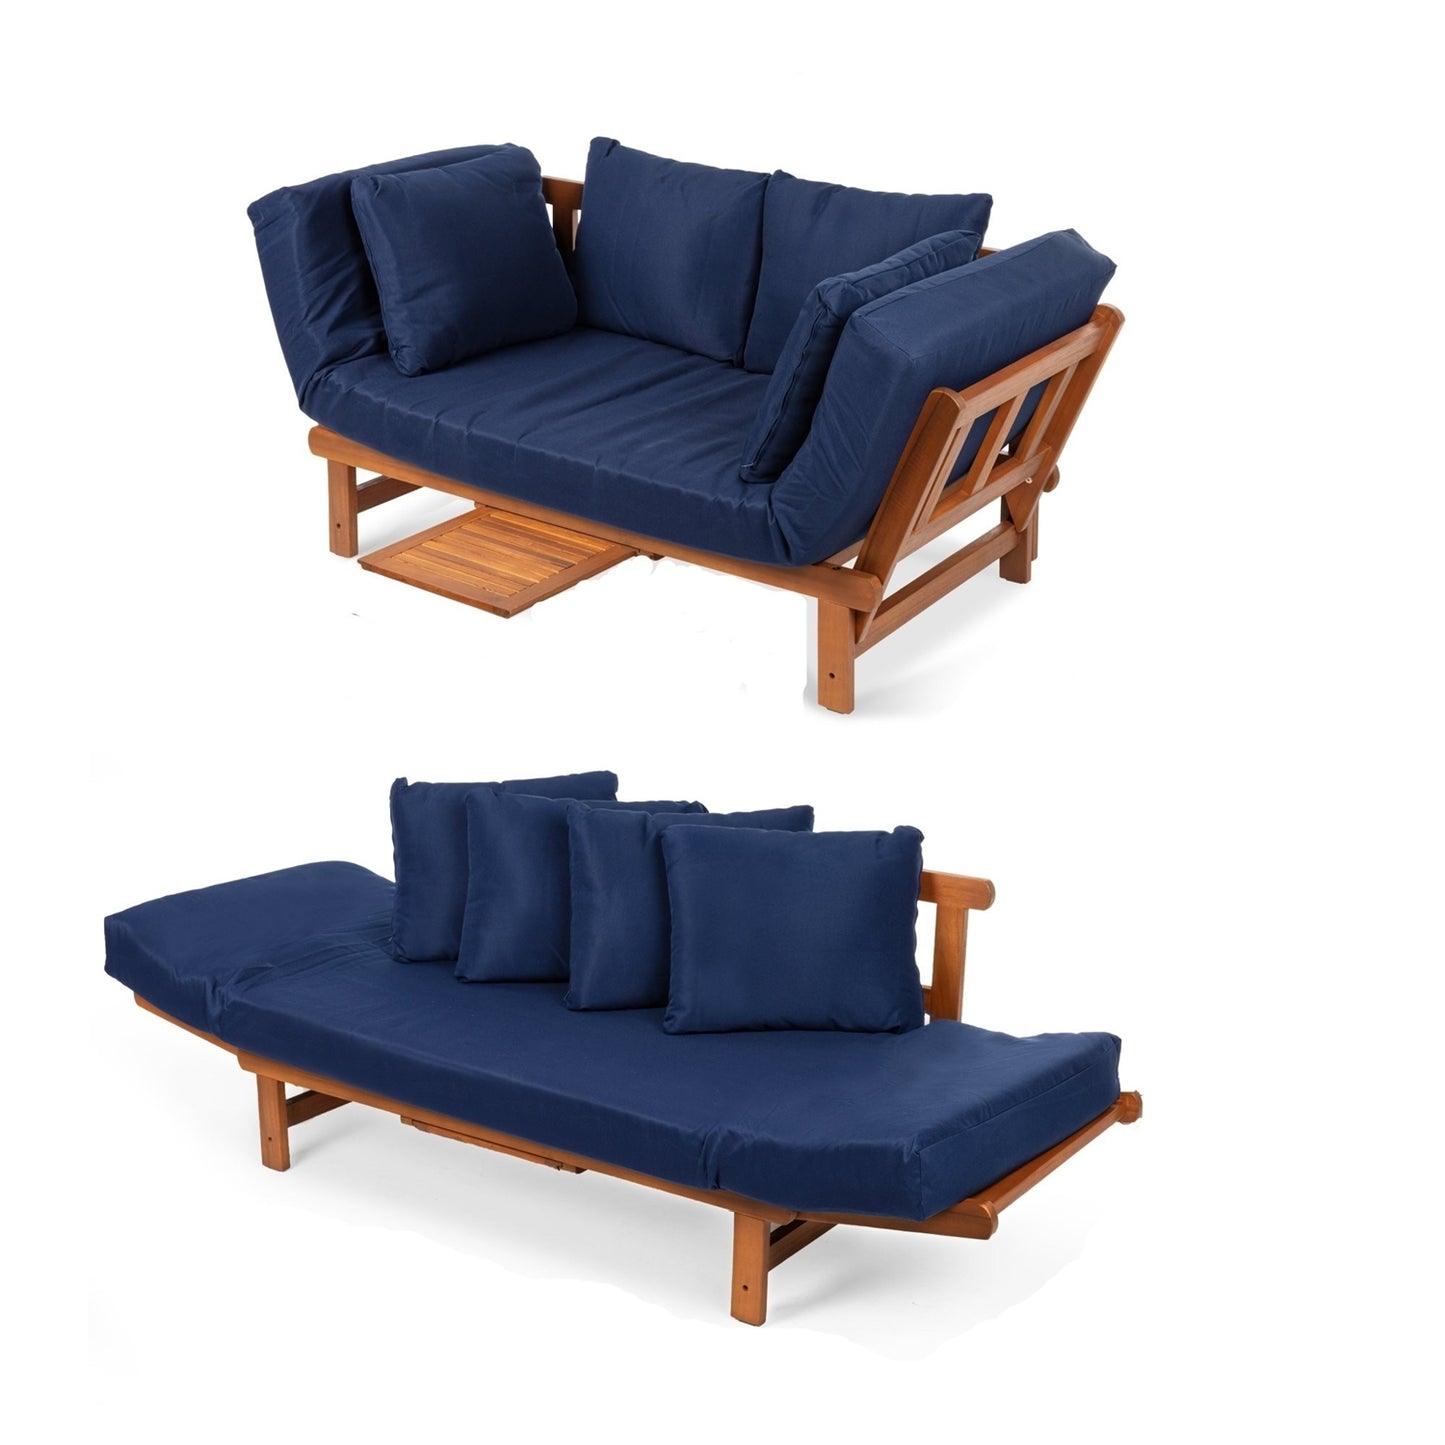 Navy Blue Outdoor Acacia Wood Convertible Sofa Futon with 4 Removable Pillows